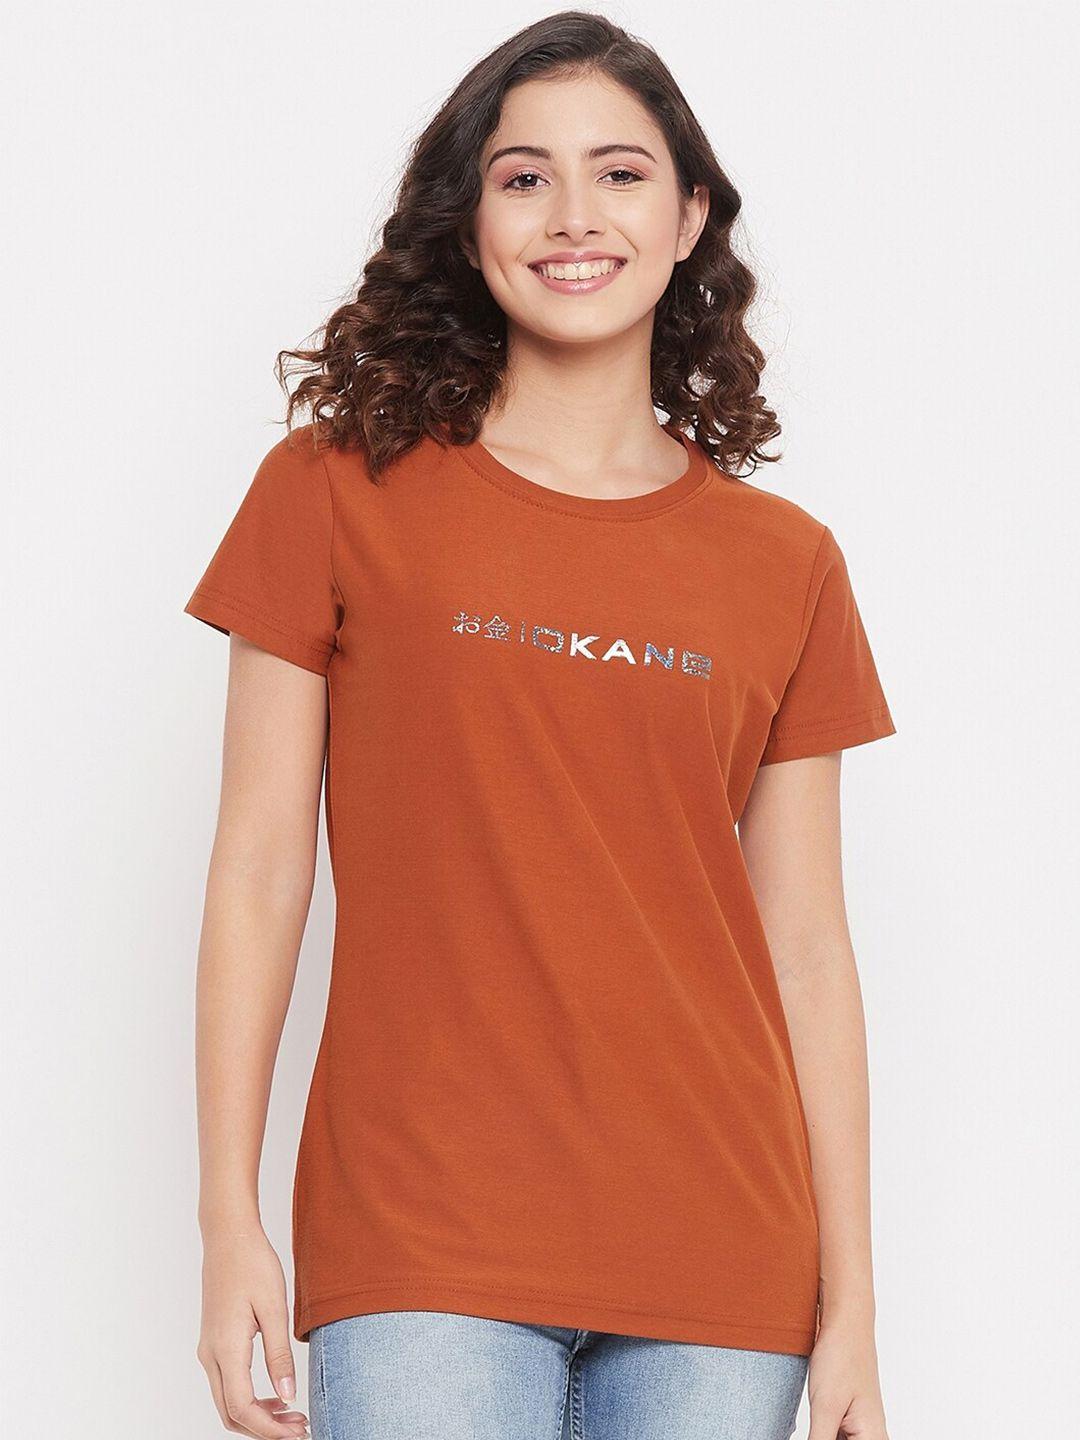 okane-women-rust-red-typography-printed-t-shirt